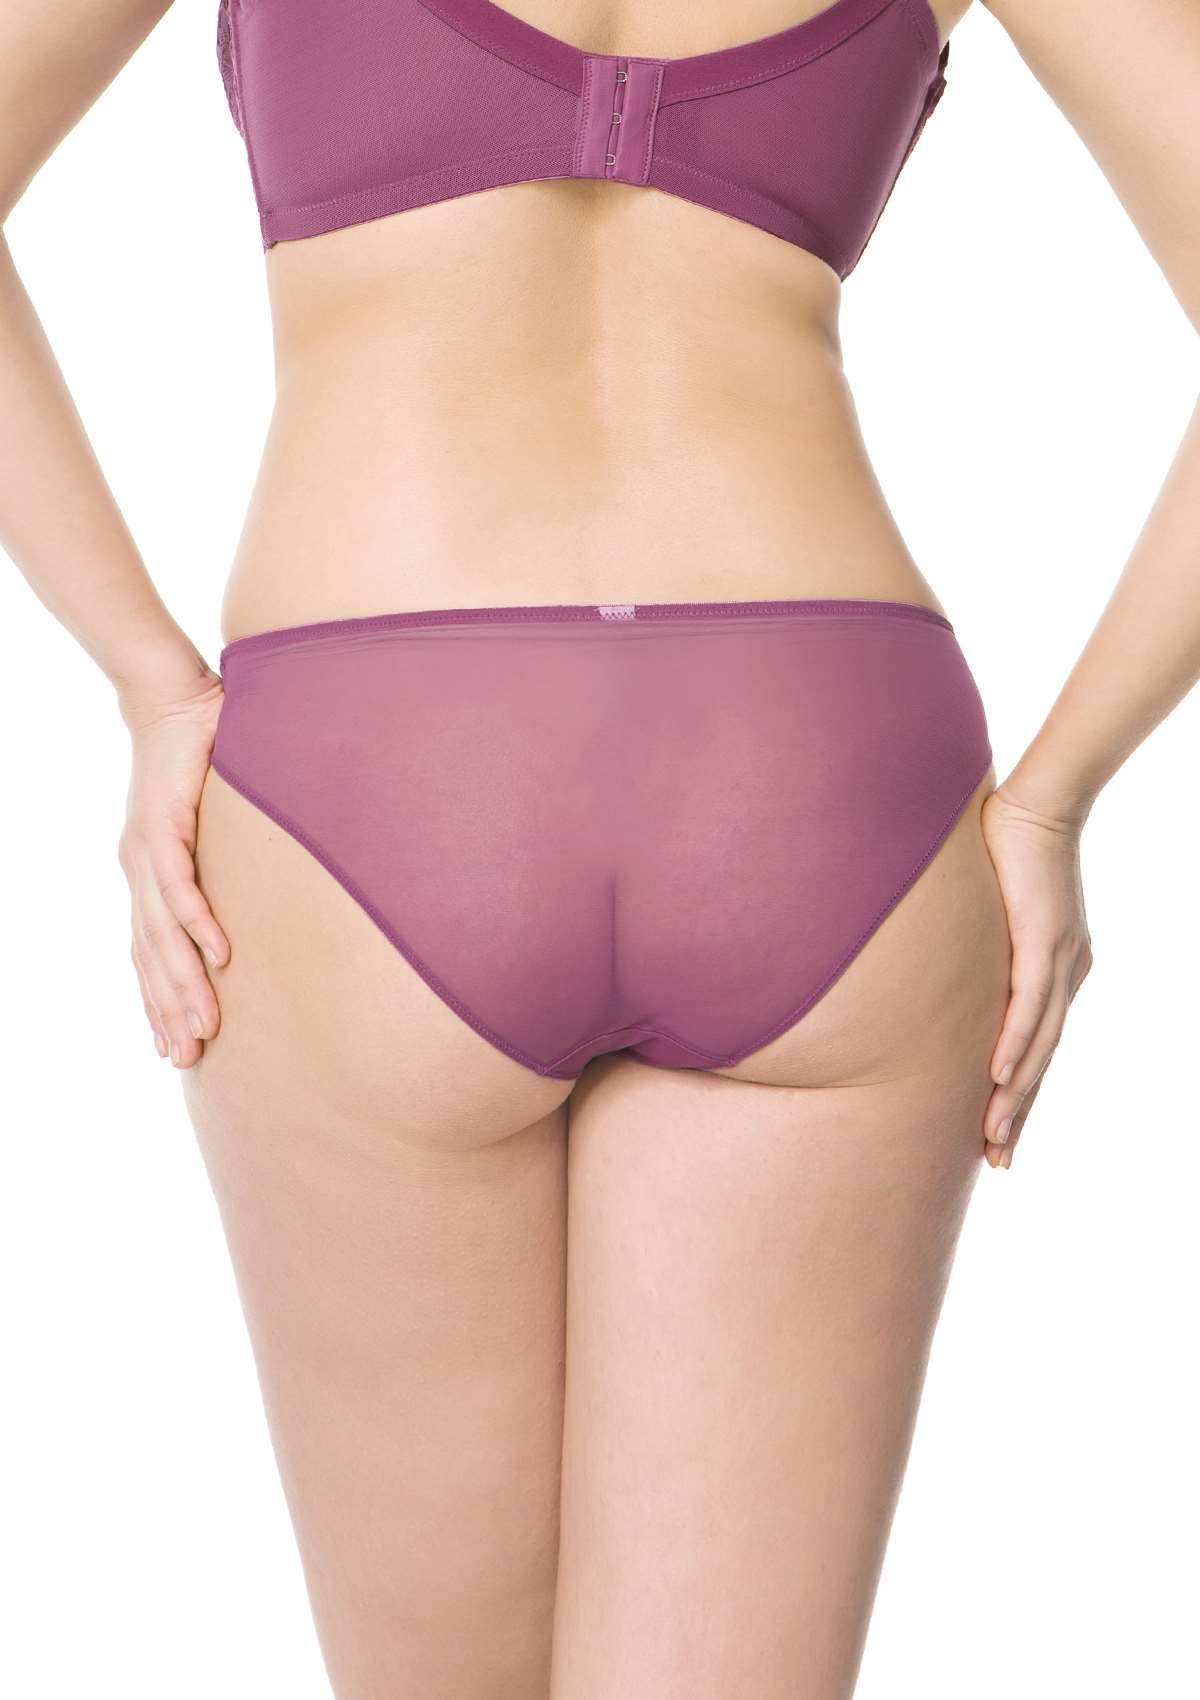 HSIA Peony Lace Mesh Everyday Bikini Underwear 3 Pack - XL / Light Coral+Green+Purple